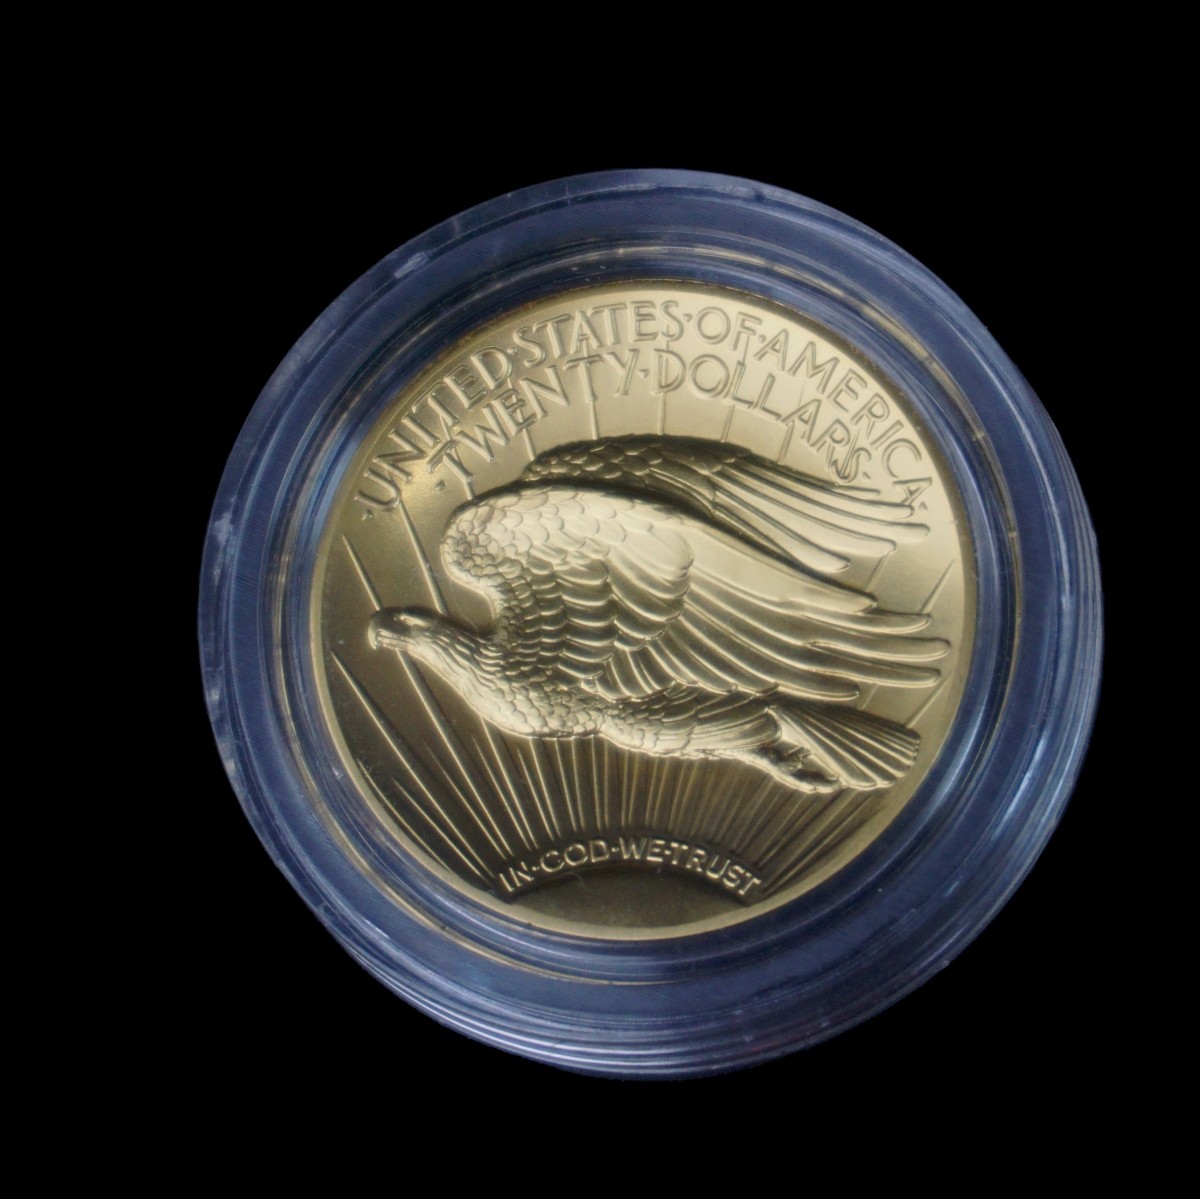 2009 $20 Double Eagle Gold Coin